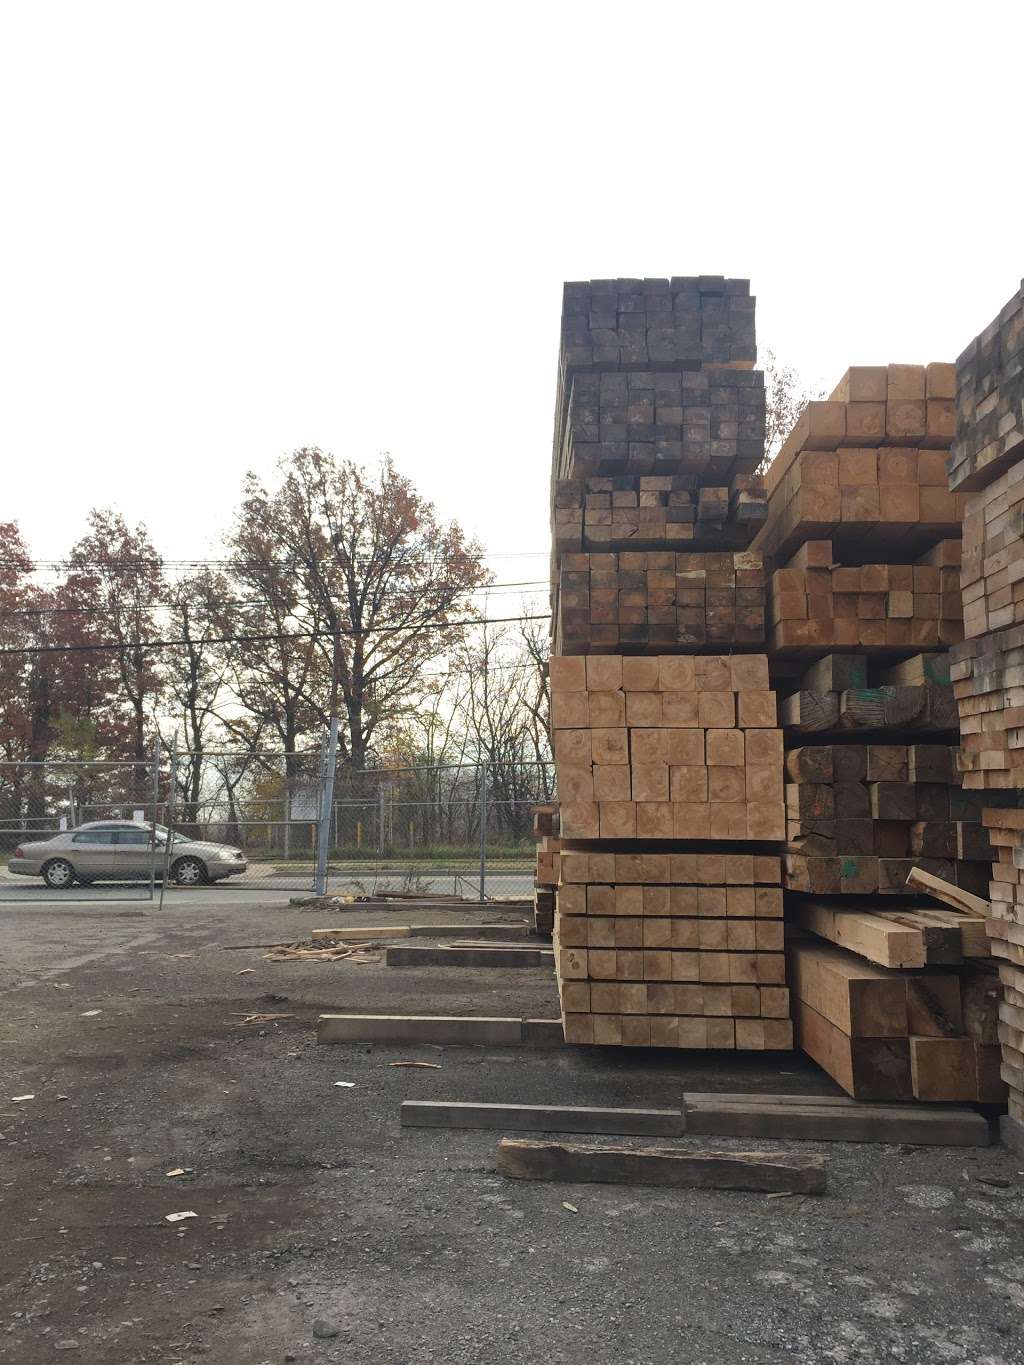 E.W. McClave Lumber Company, Inc. | 455 Schuyler Ave, Kearny, NJ 07032, USA | Phone: (973) 483-5670